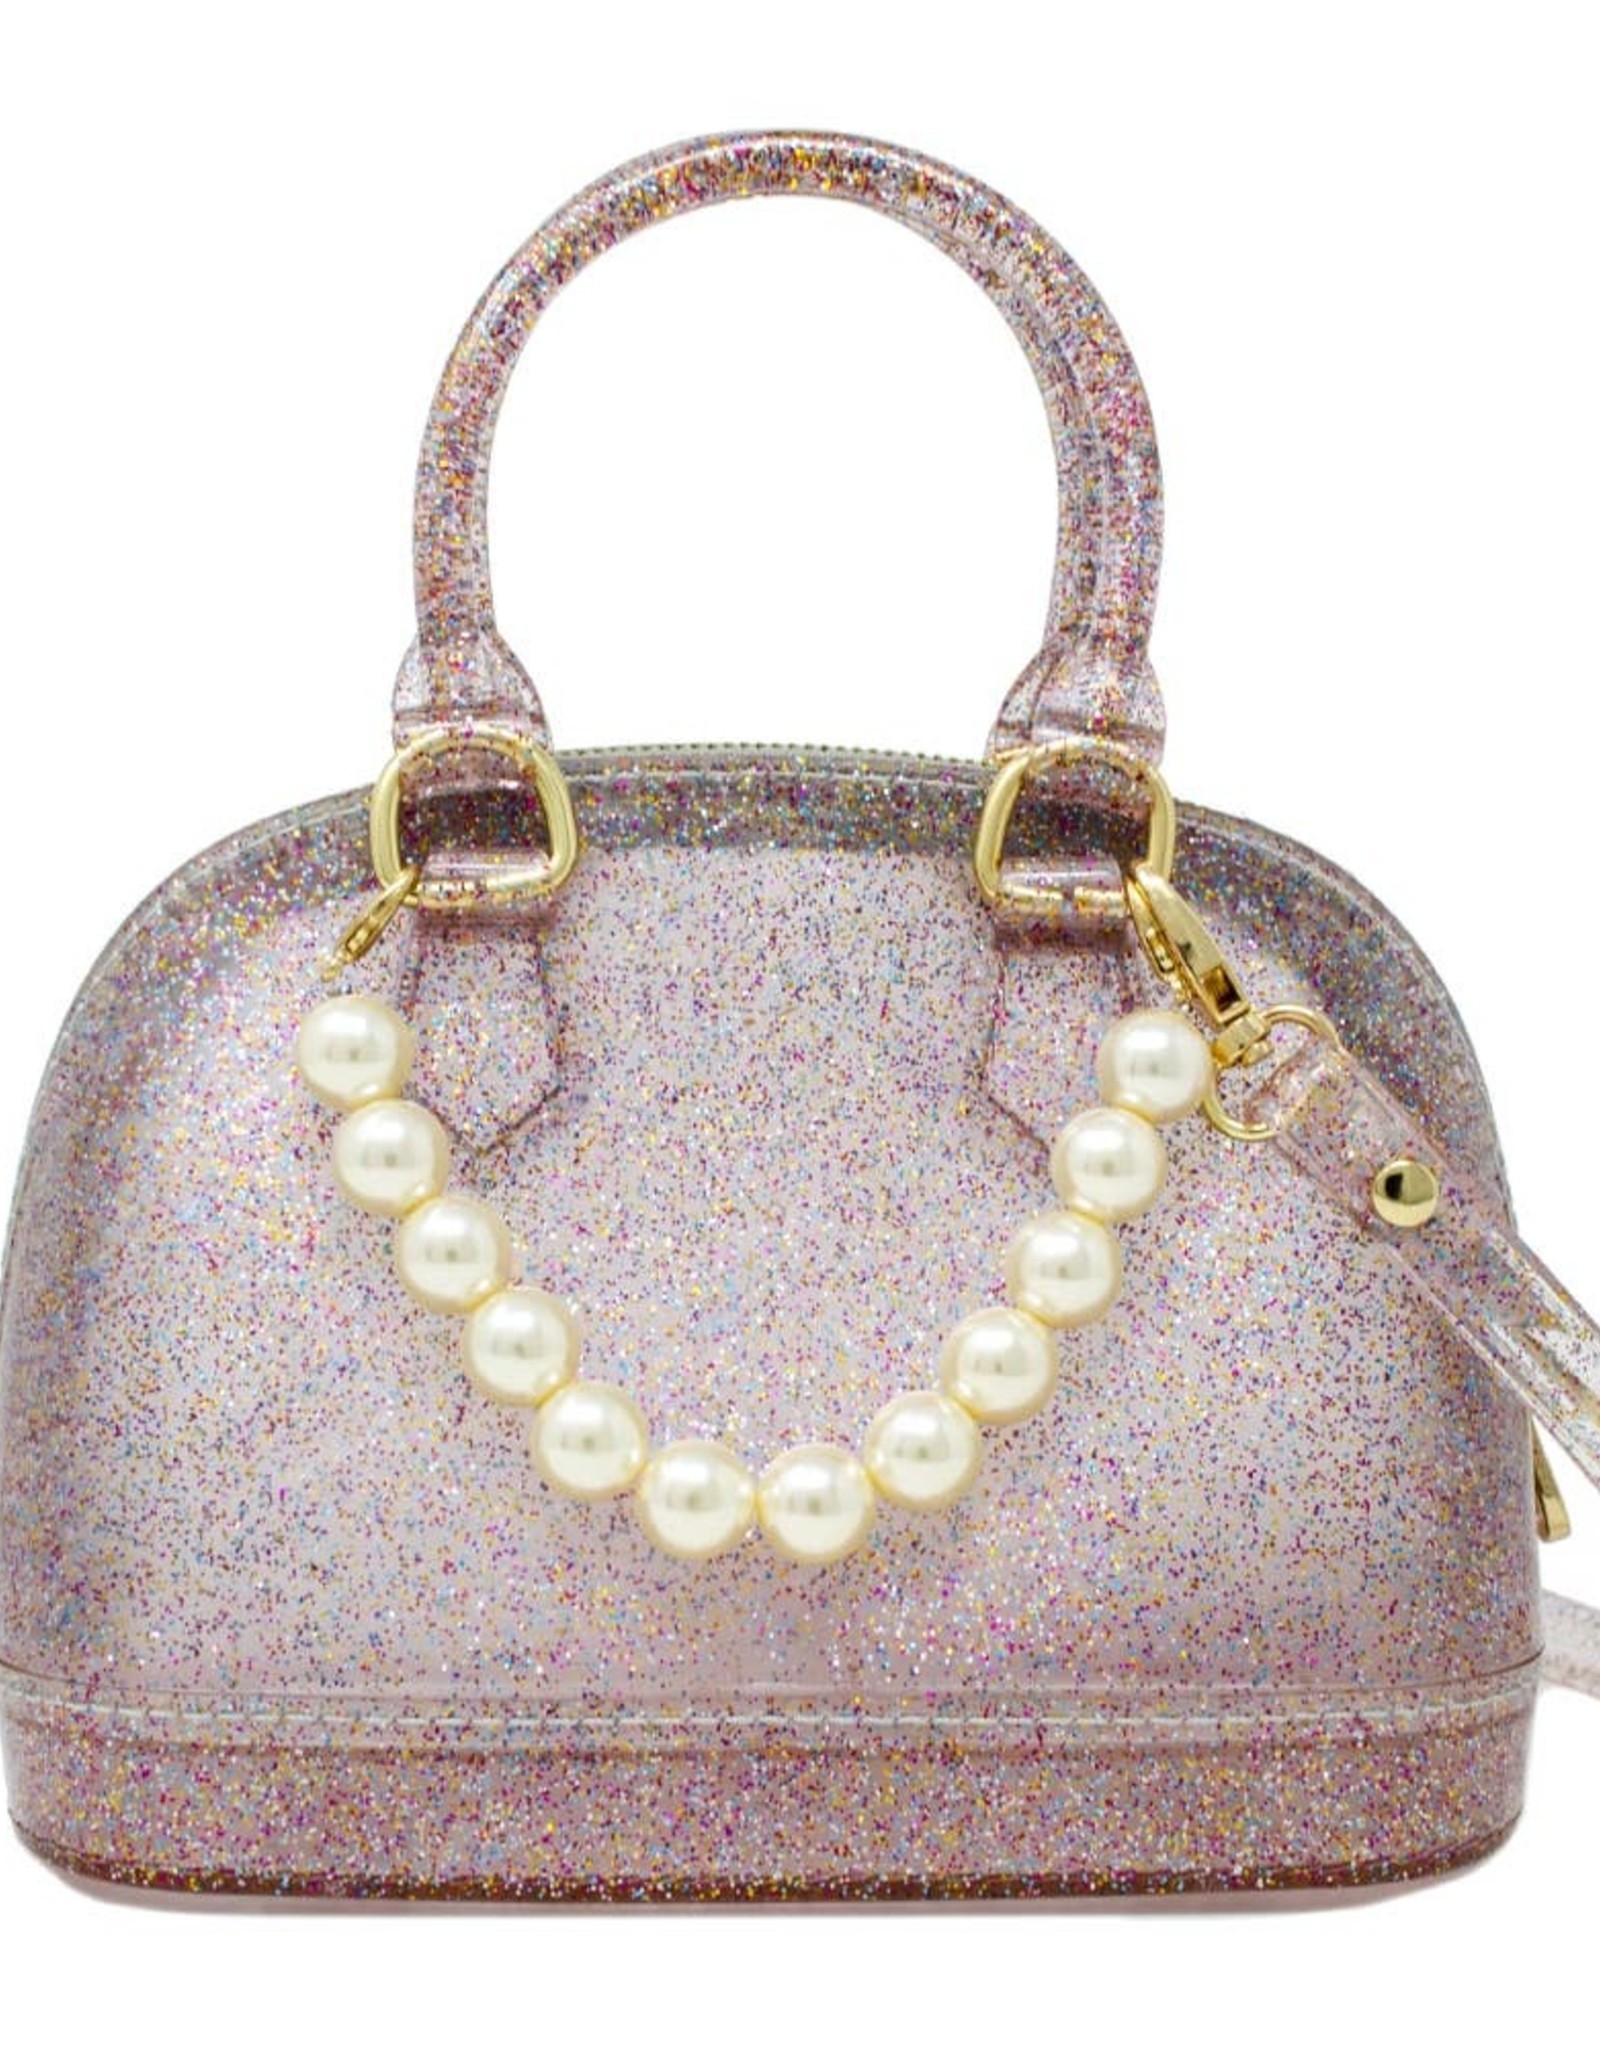 Zomi Gems Jelly Bowling Crossbody Handbag with Pearls - Rainbow Glitter